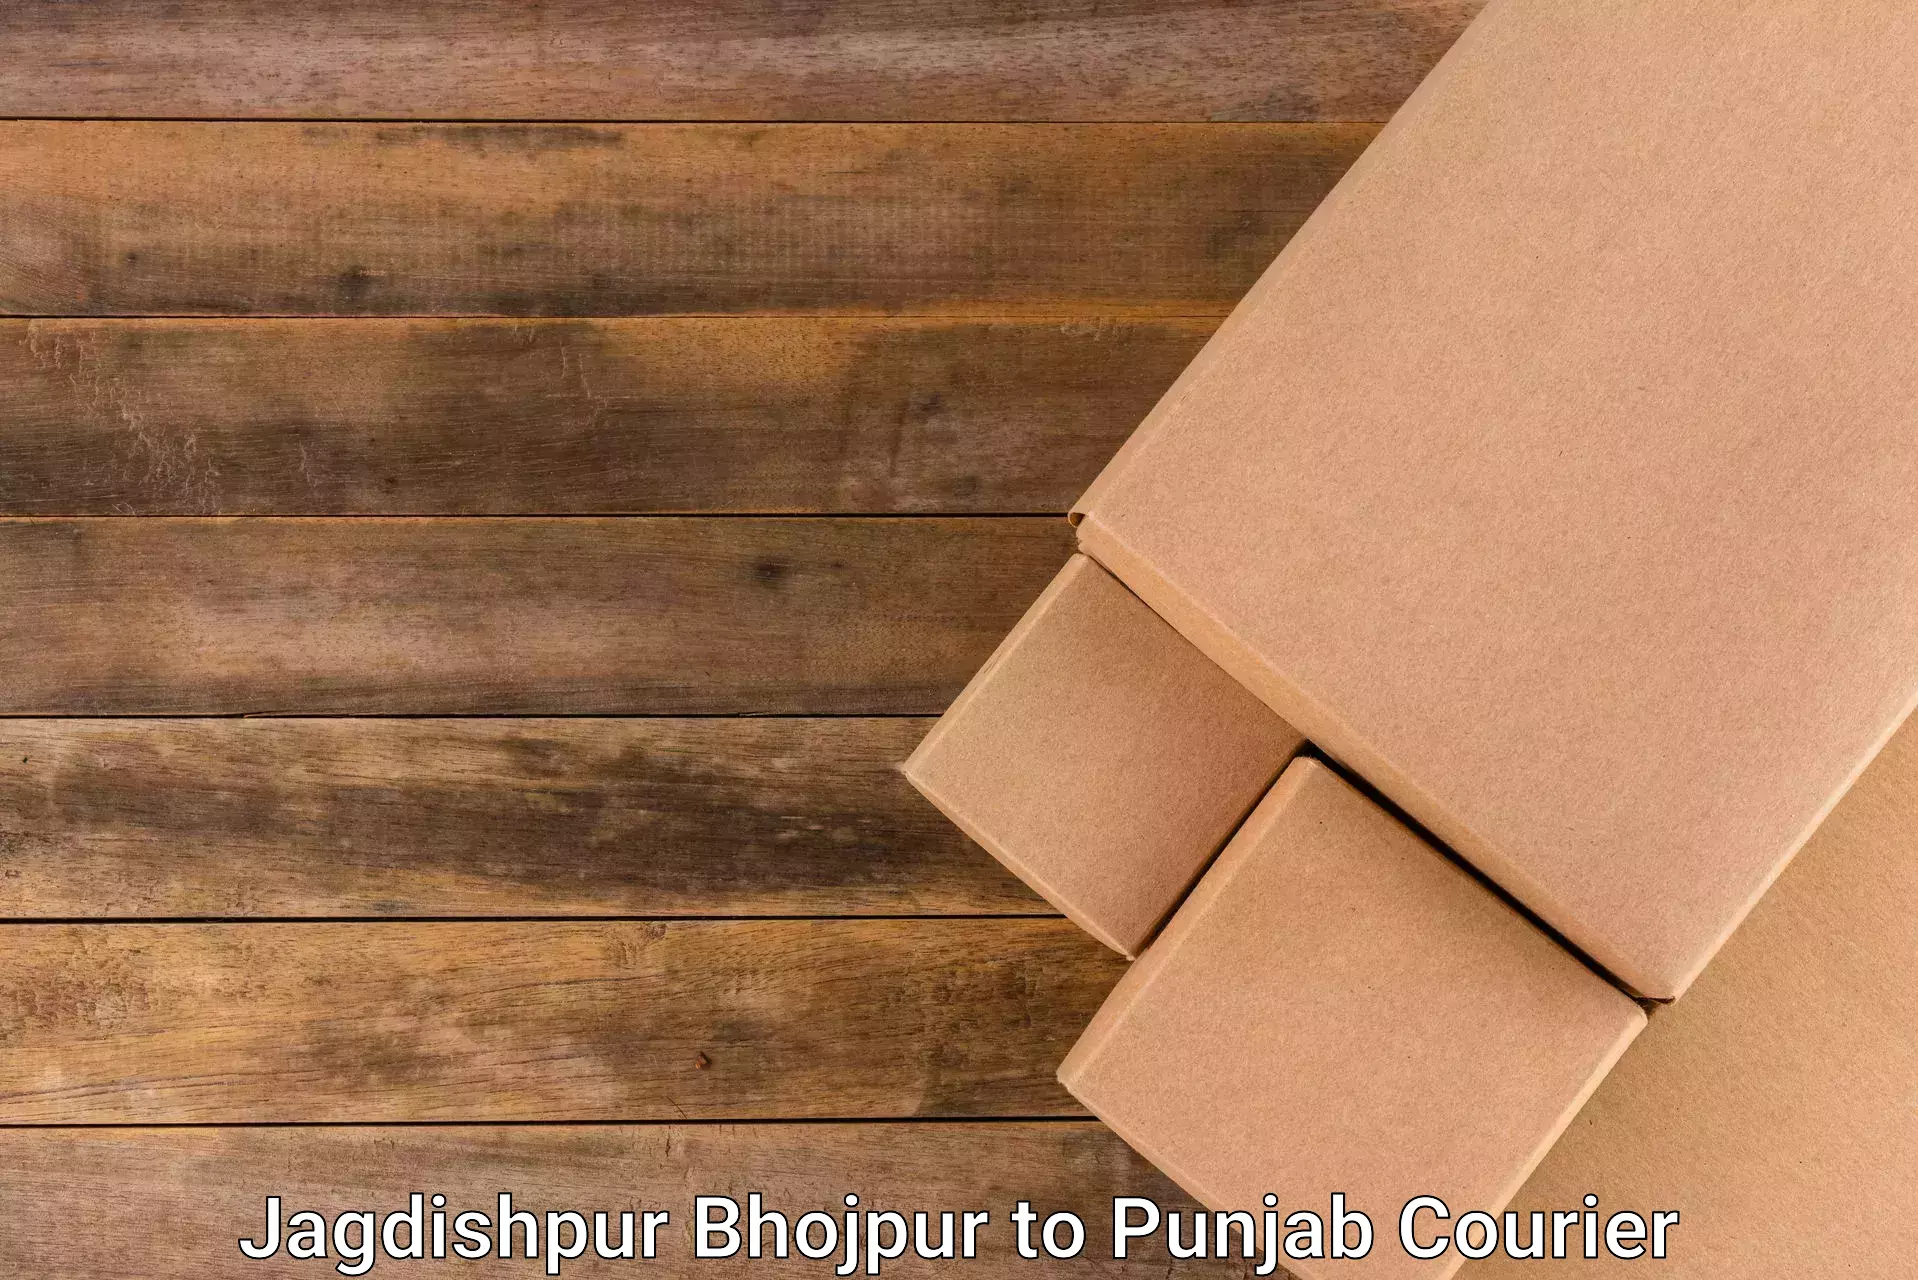 Multi-national courier services Jagdishpur Bhojpur to Talwara